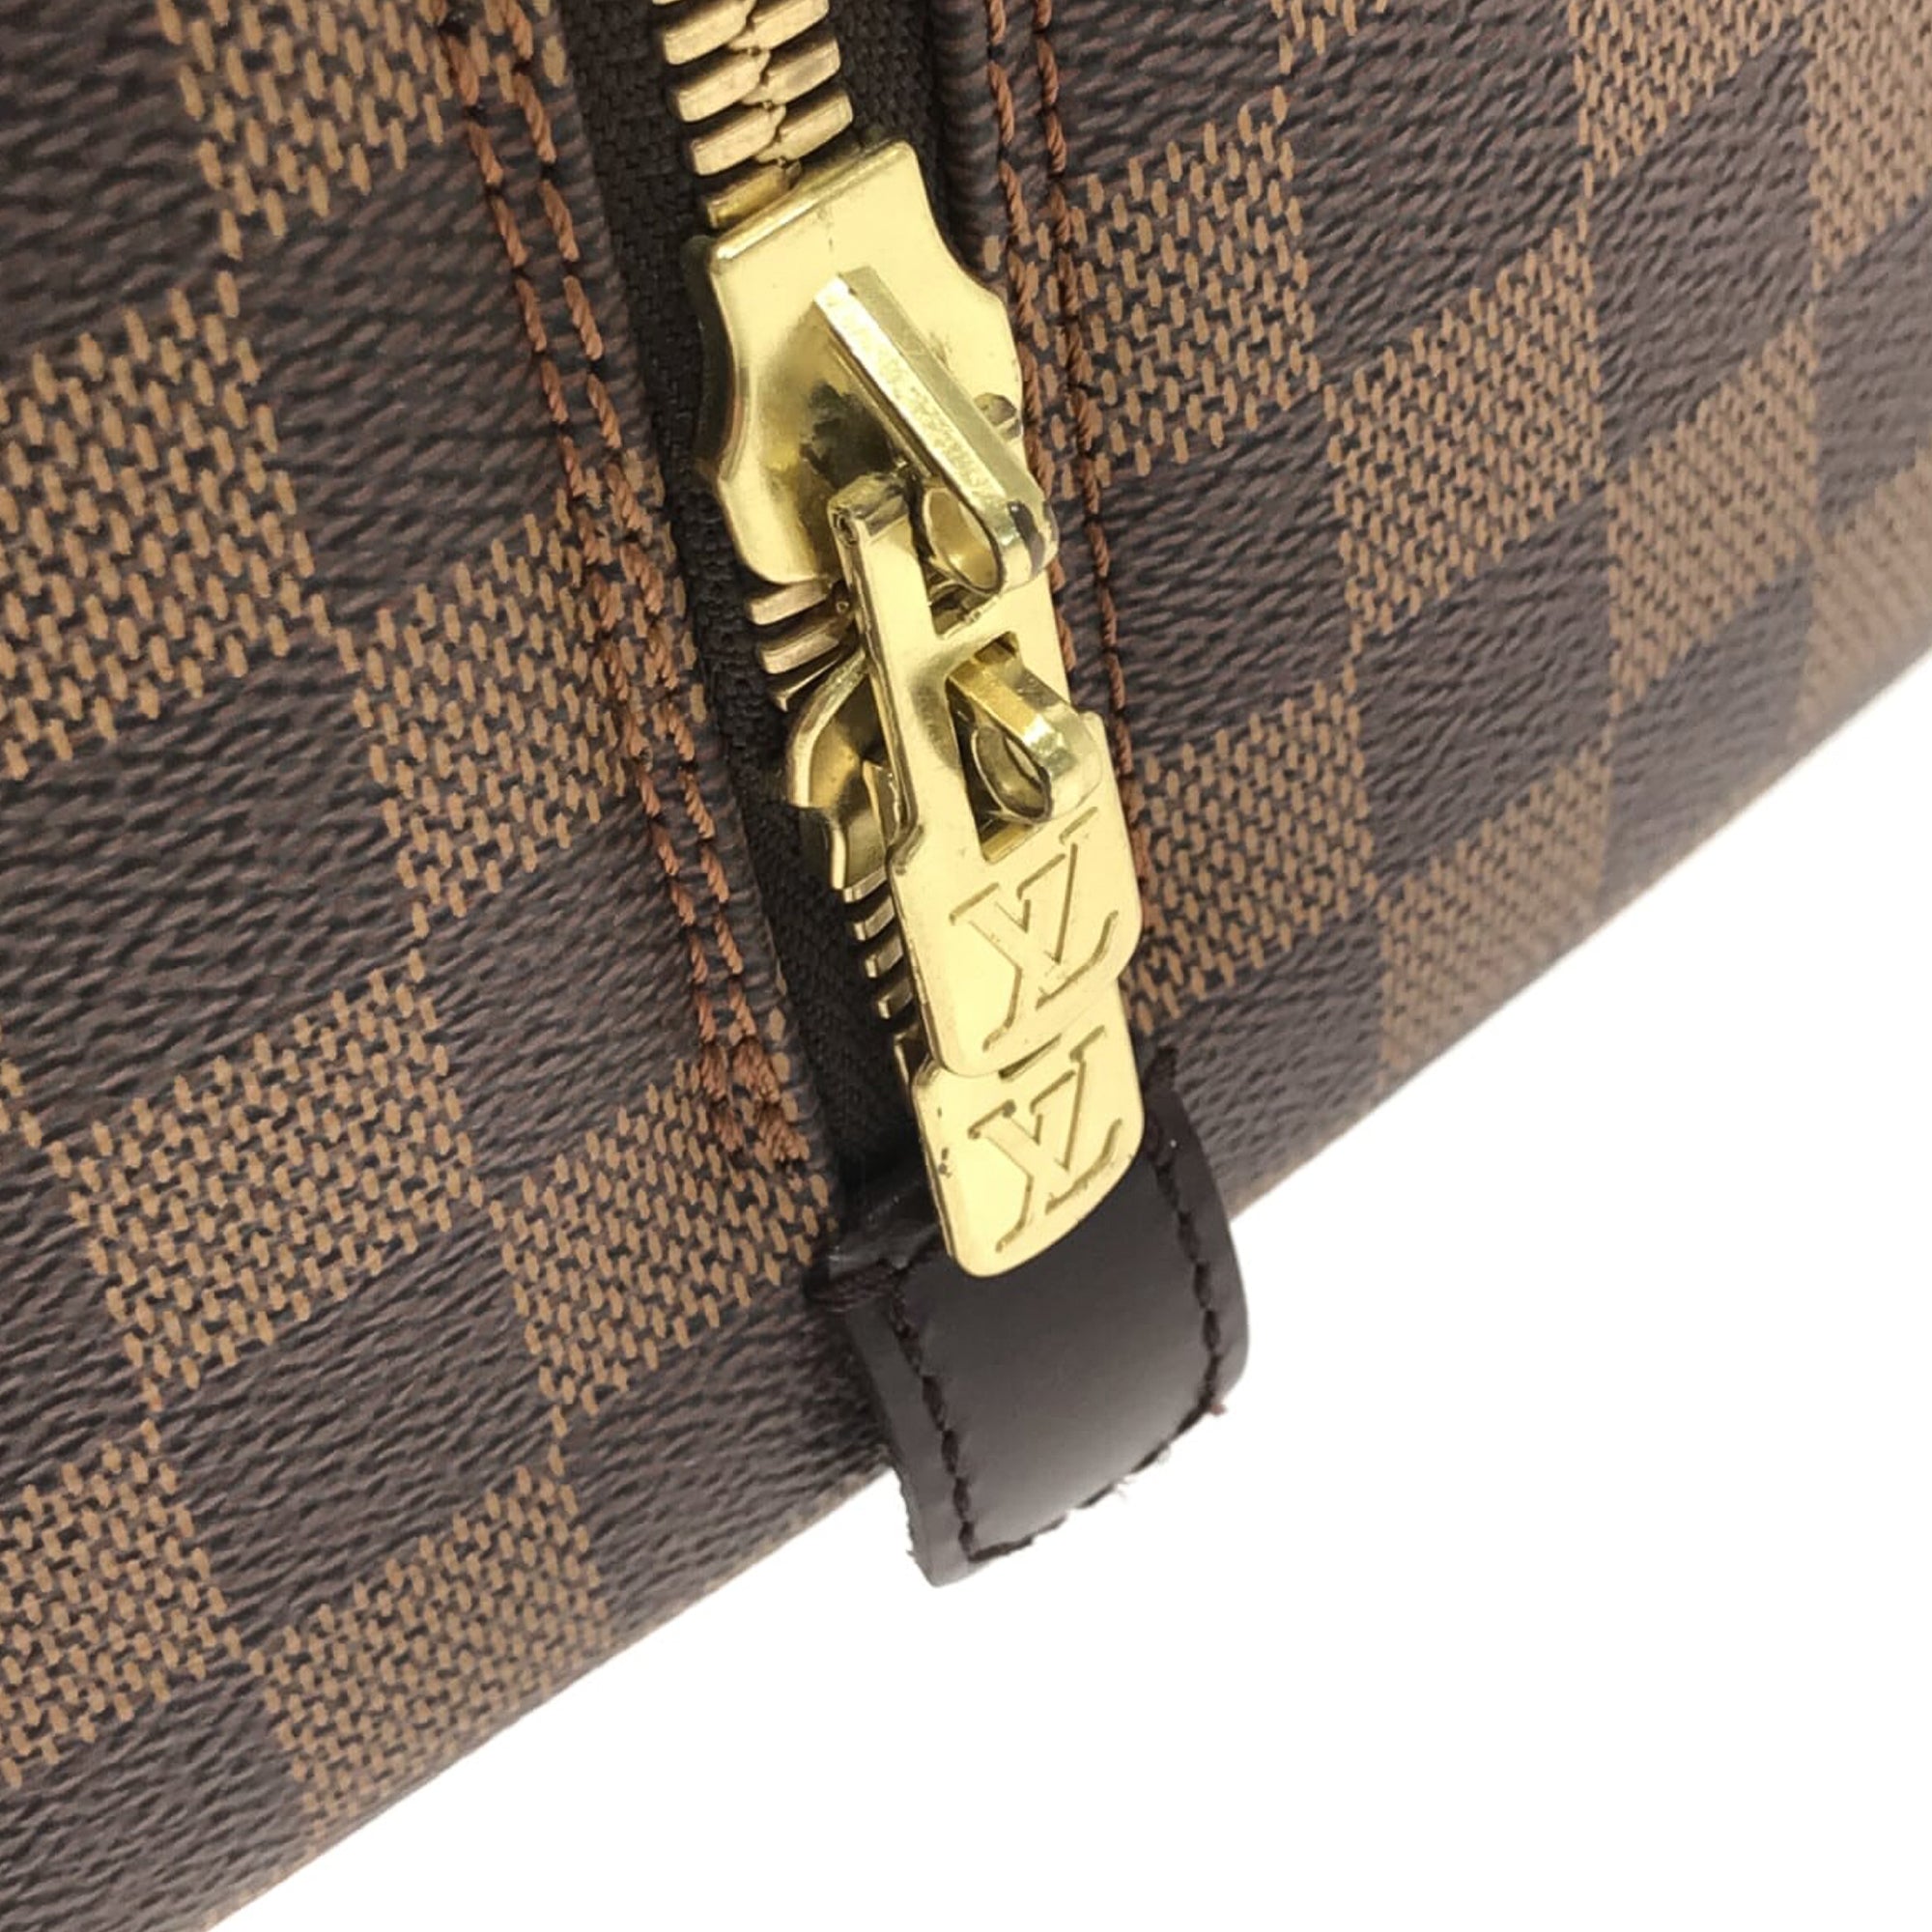 Brown Louis Vuitton Damier Ebene Ribera GM Travel Bag – Designer Revival